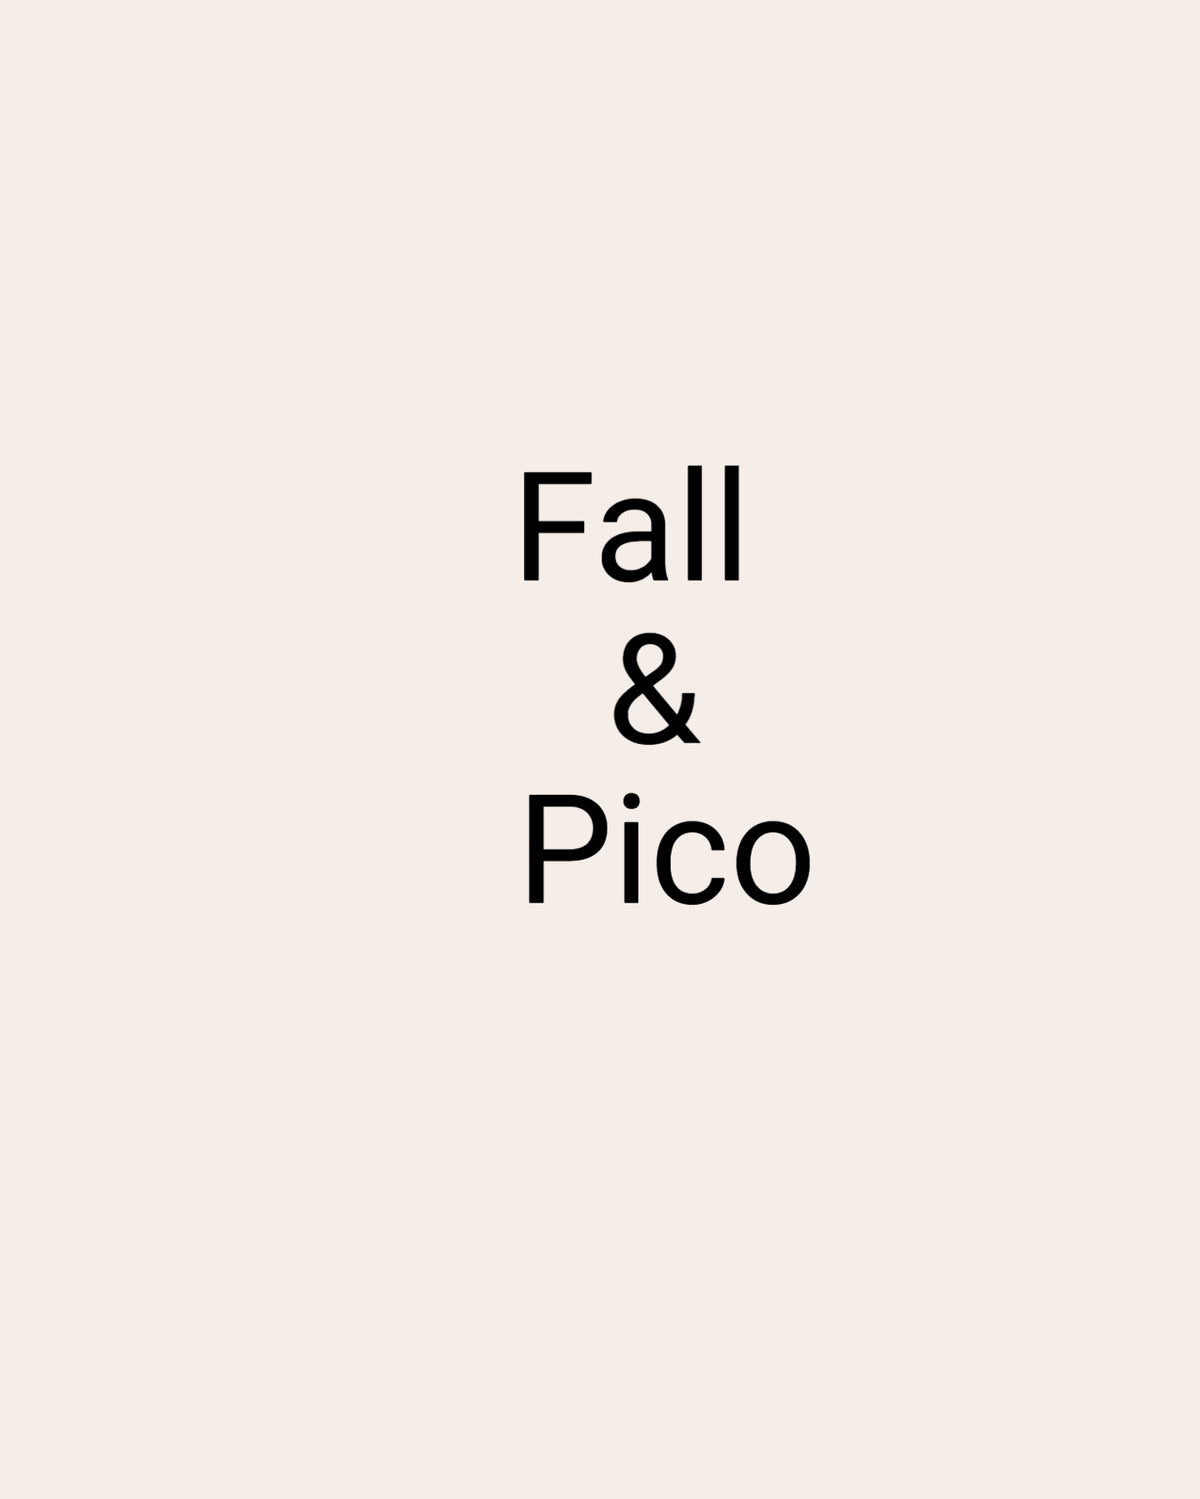 Fall & Picko